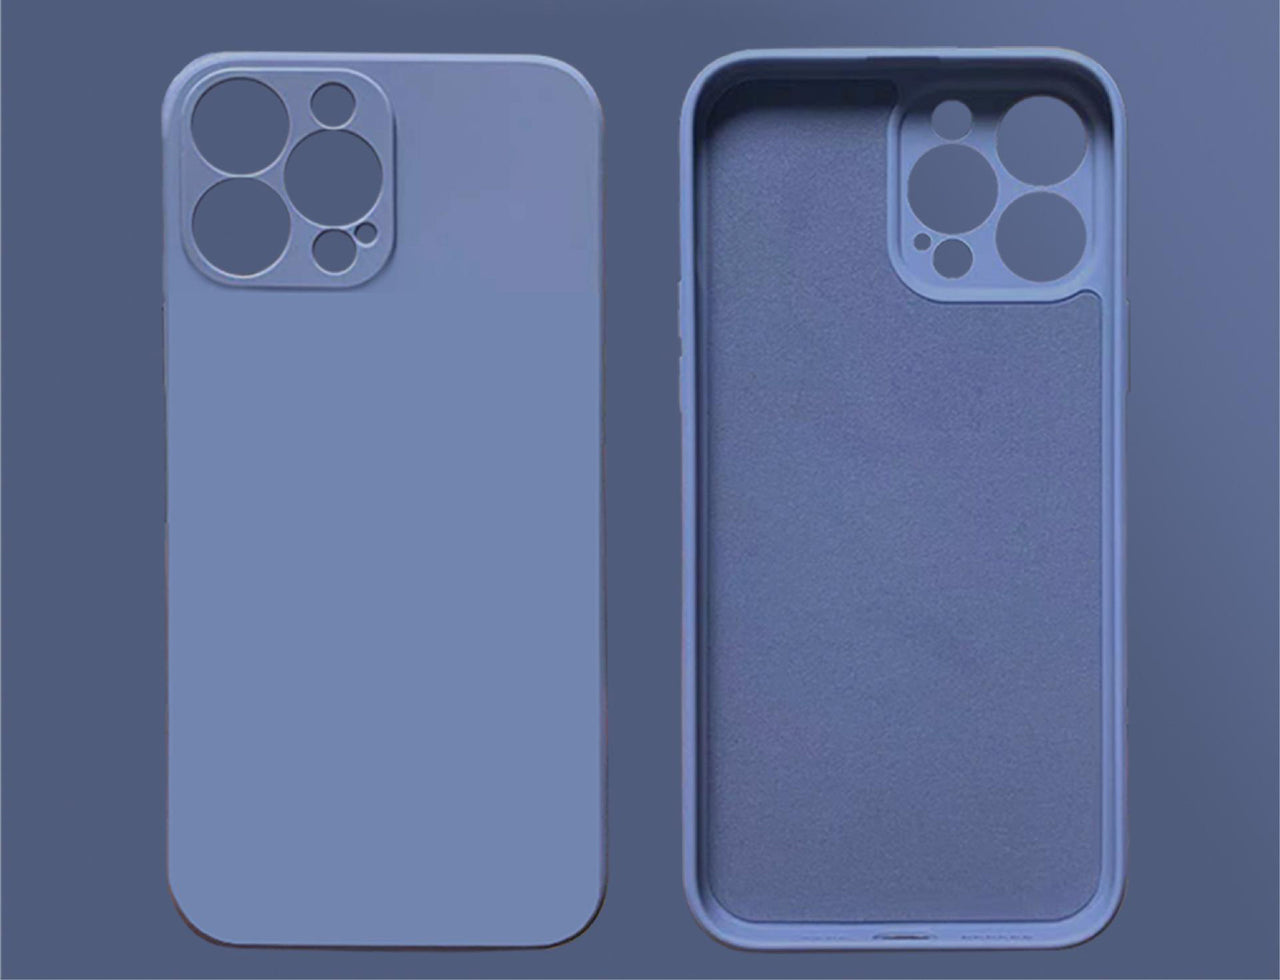 No Design Soft Silicone iPhone Cases